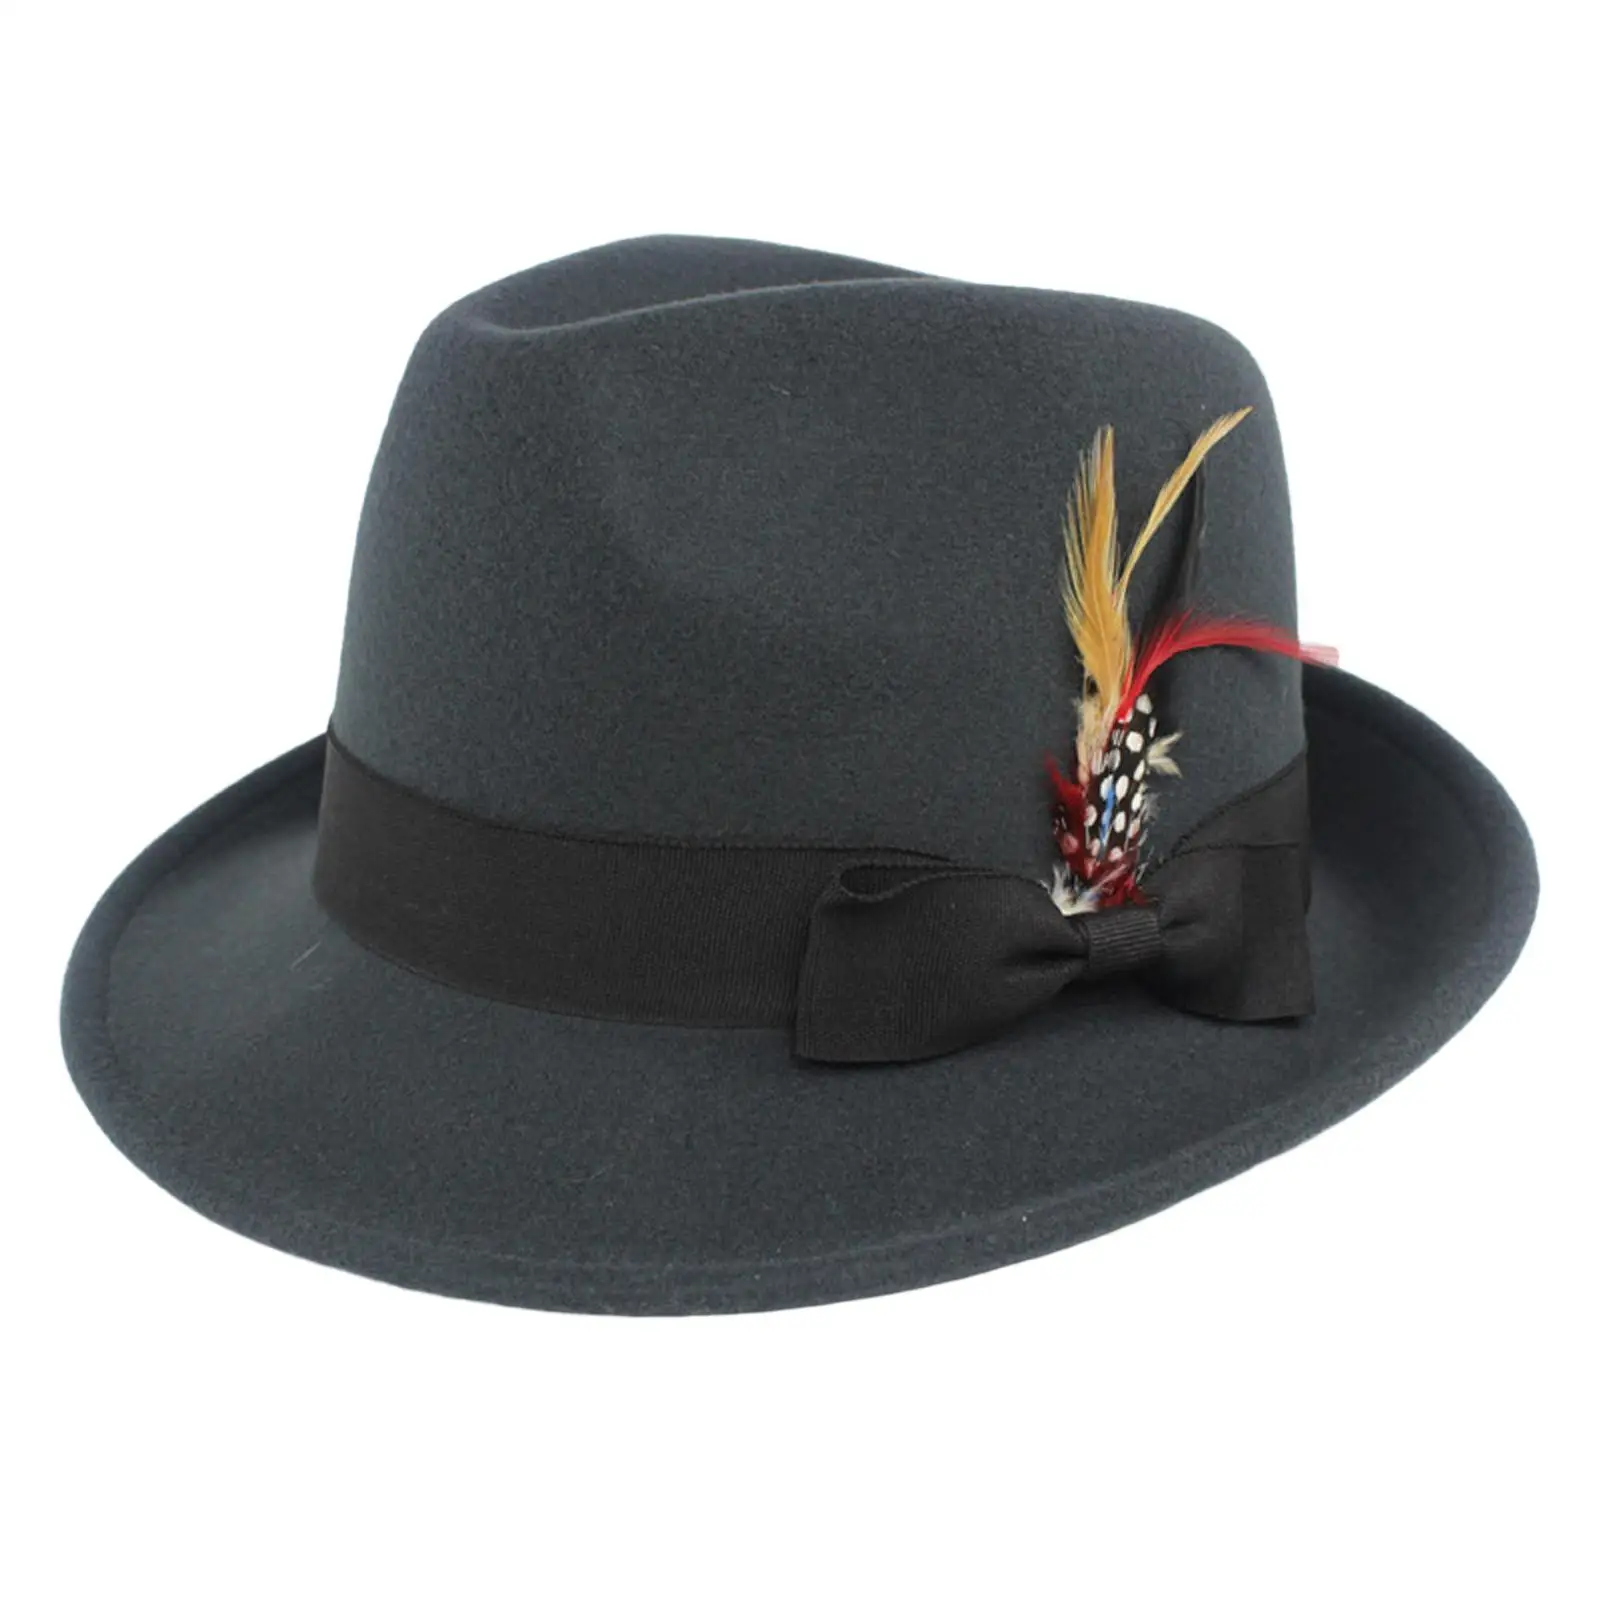 Classic Fedora Hats Short Brim Gentleman Jazz Cap Sunhat Casual Jazz Cap for Men and Women Outdoor Travel Summer Beach